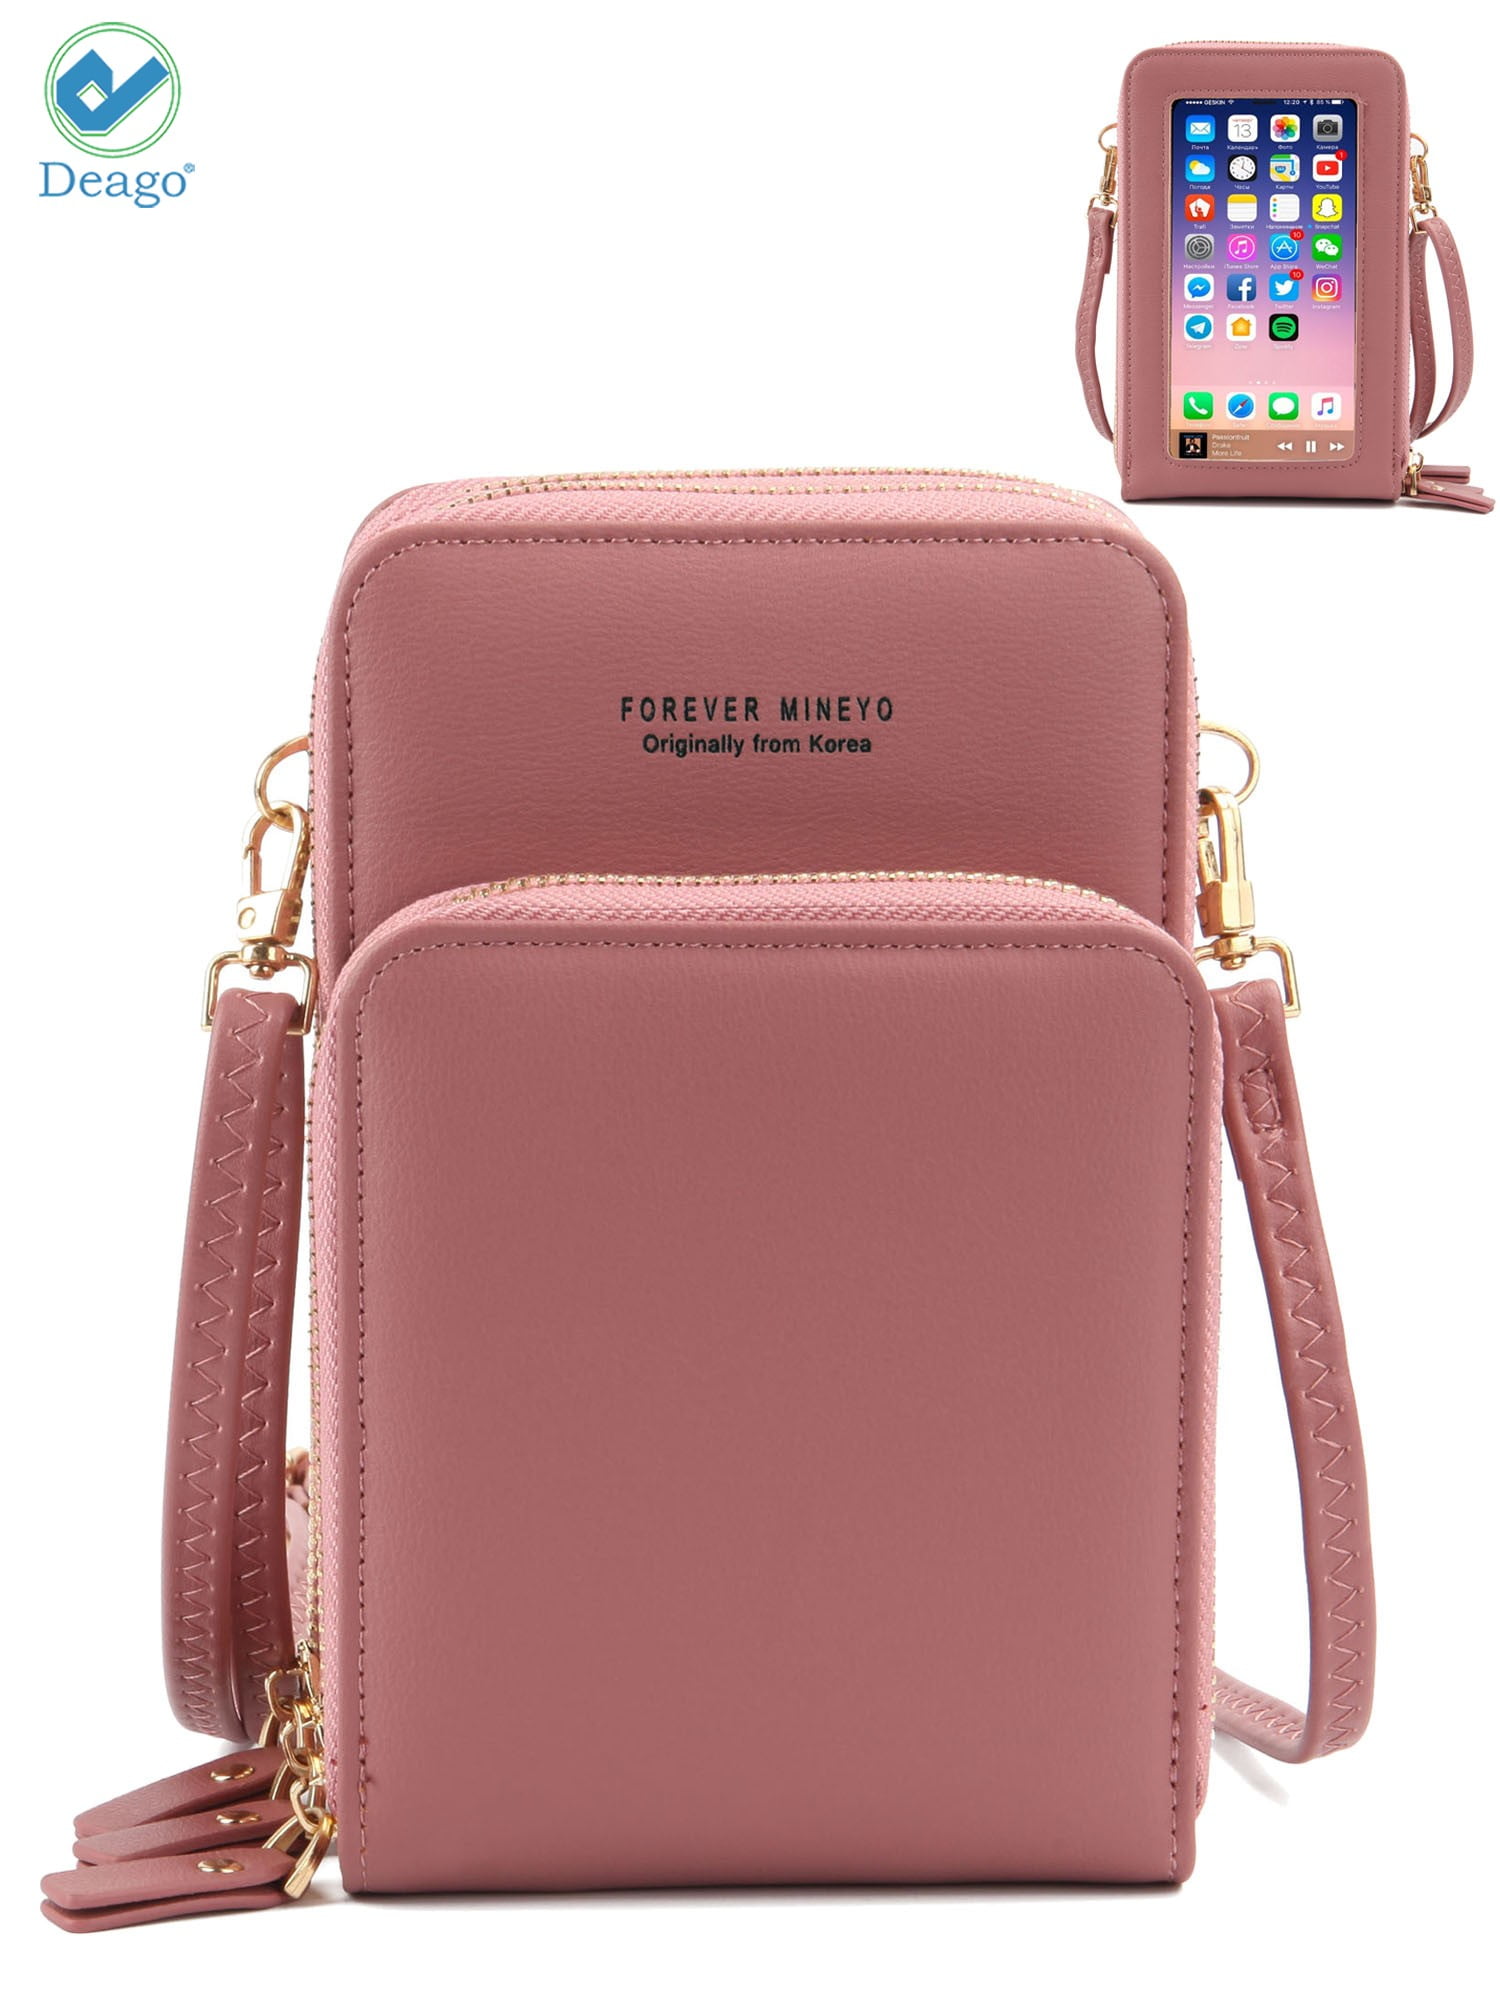 Deago Women Crossbody Cellphone Purse Touch Screen Bag RFID Blocking Wallet Handbag with Shoulder Strap Pink fb0e549c 4eb5 4ba0 bf37 906693bb36de.14e06fe97f48c3ad161a48e0cac4c694